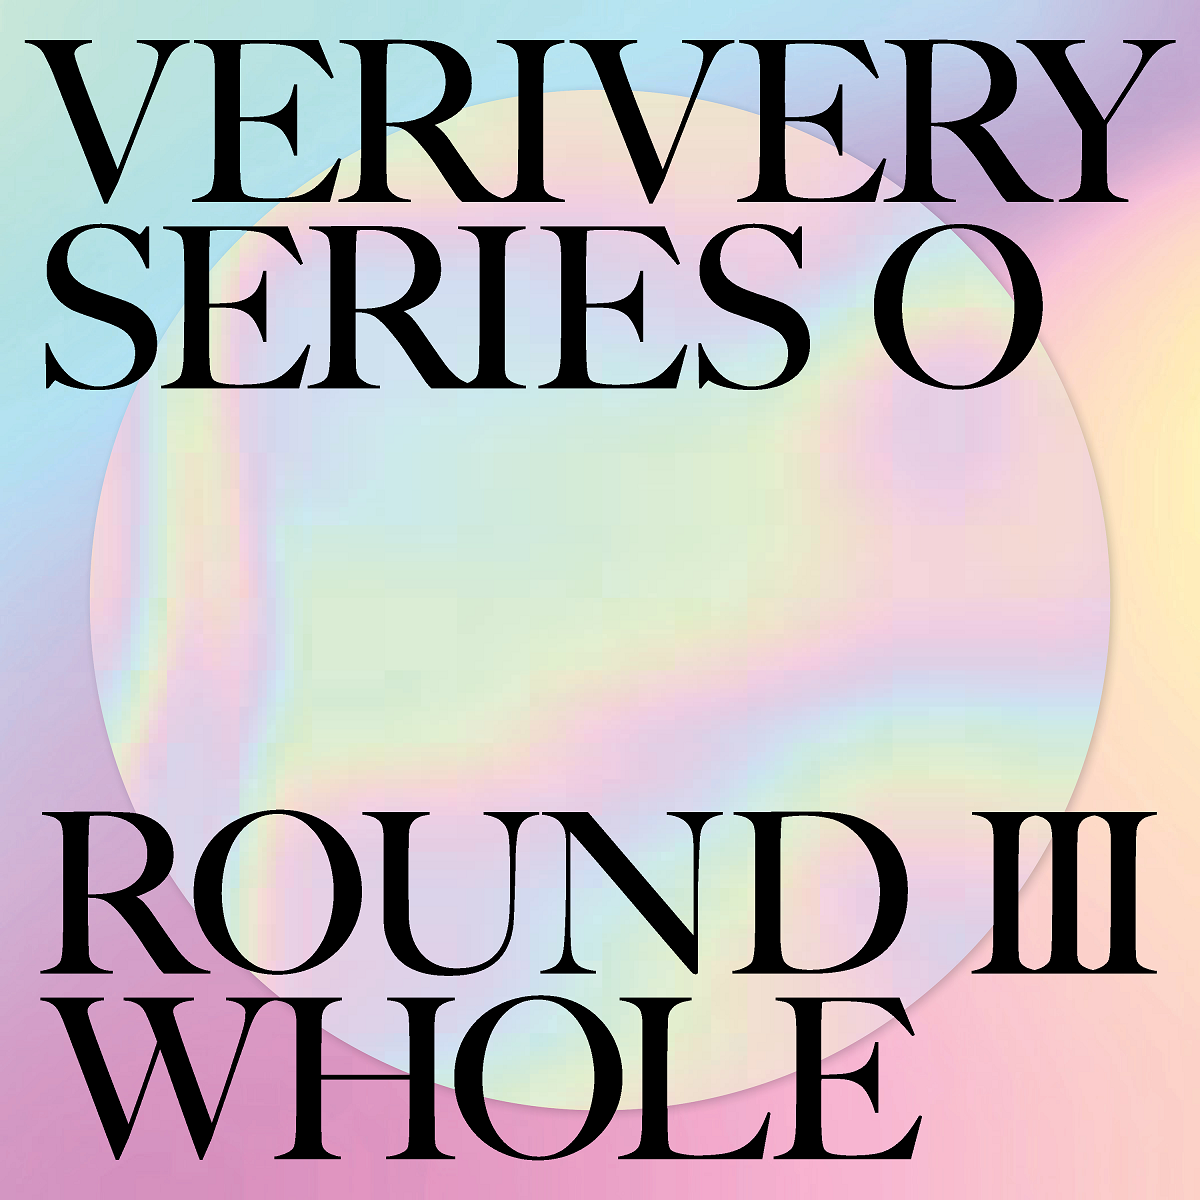 VERIVERY 1ST ALBUM 'VERIVERY SERIES 'O' (ROUND 3:WHOLE)' A VERSION COVER